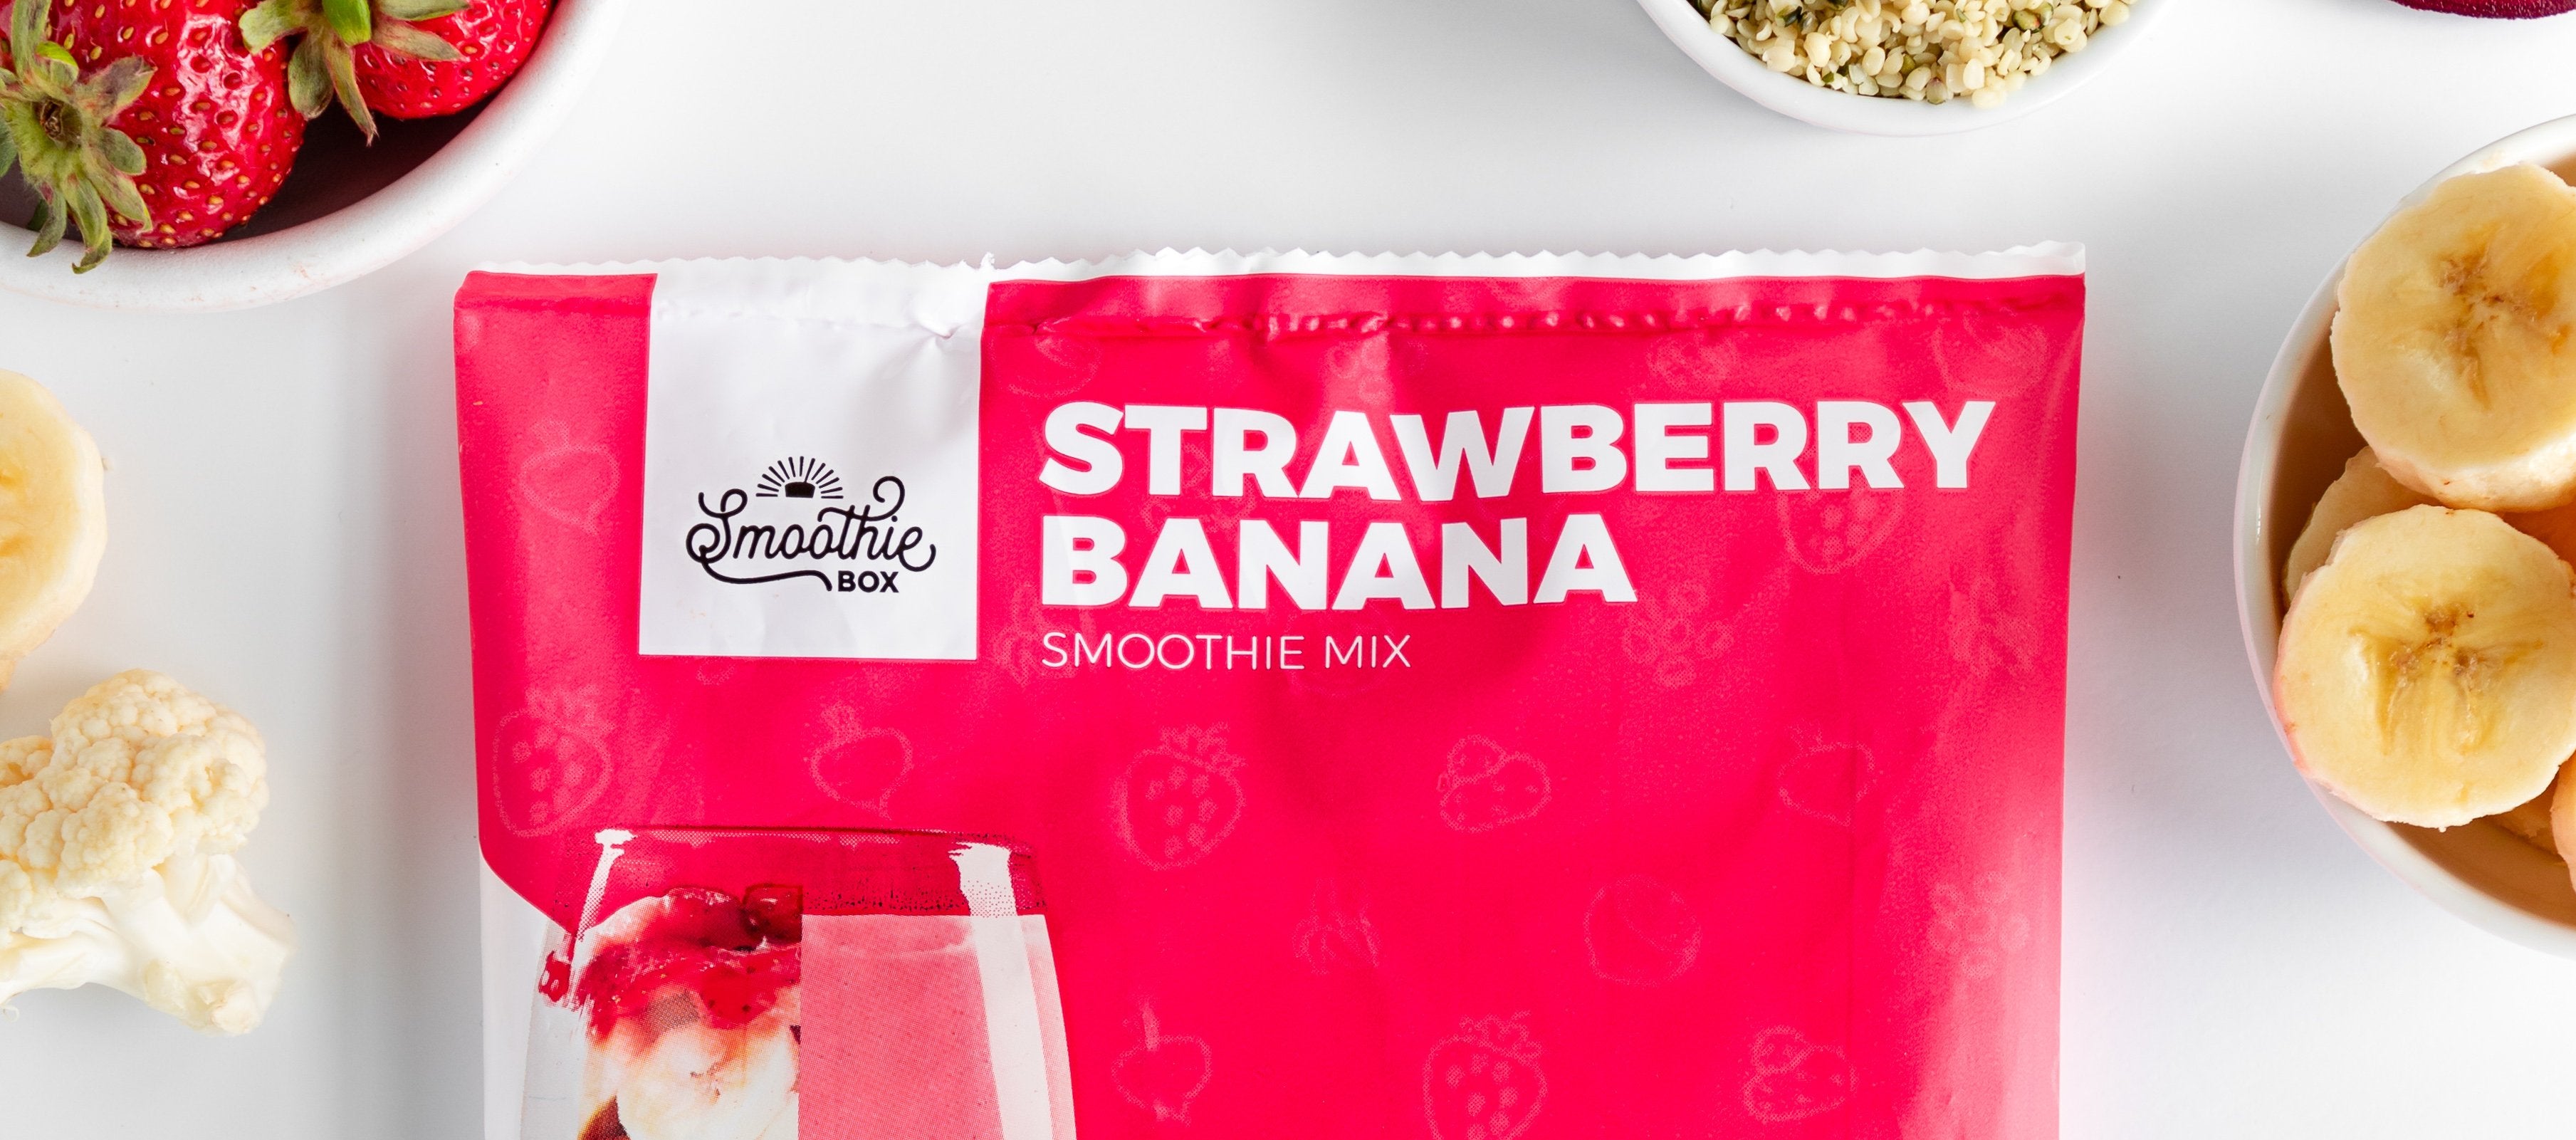 Strawberry banana pouch